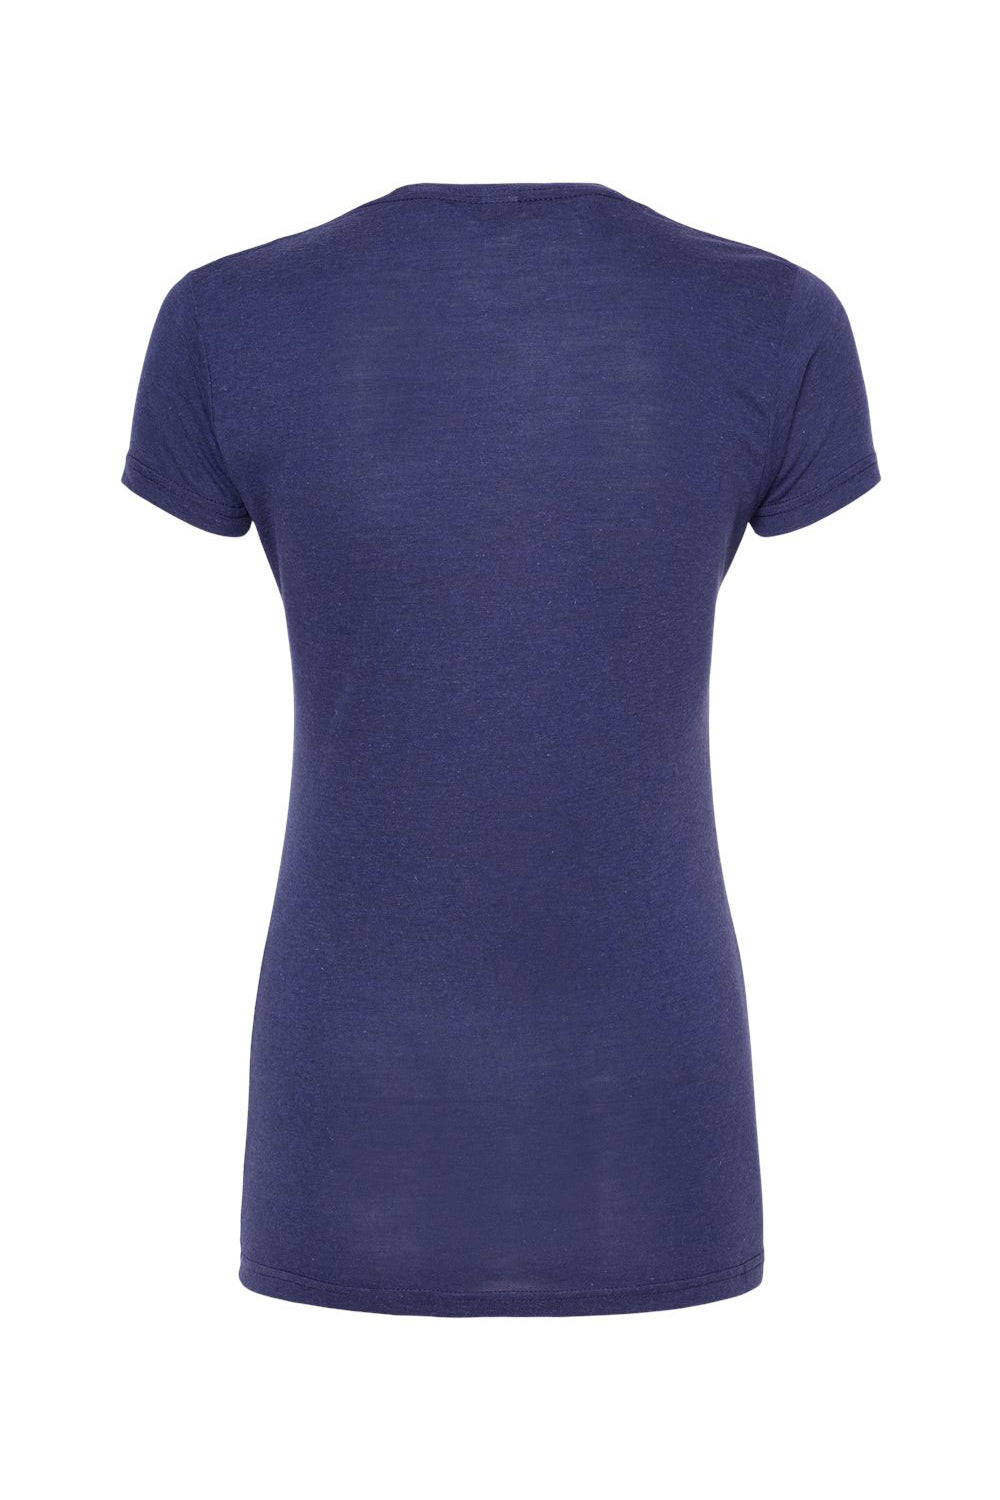 Tultex 253 Womens Short Sleeve Crewneck T-Shirt Midnight Navy Blue Flat Back